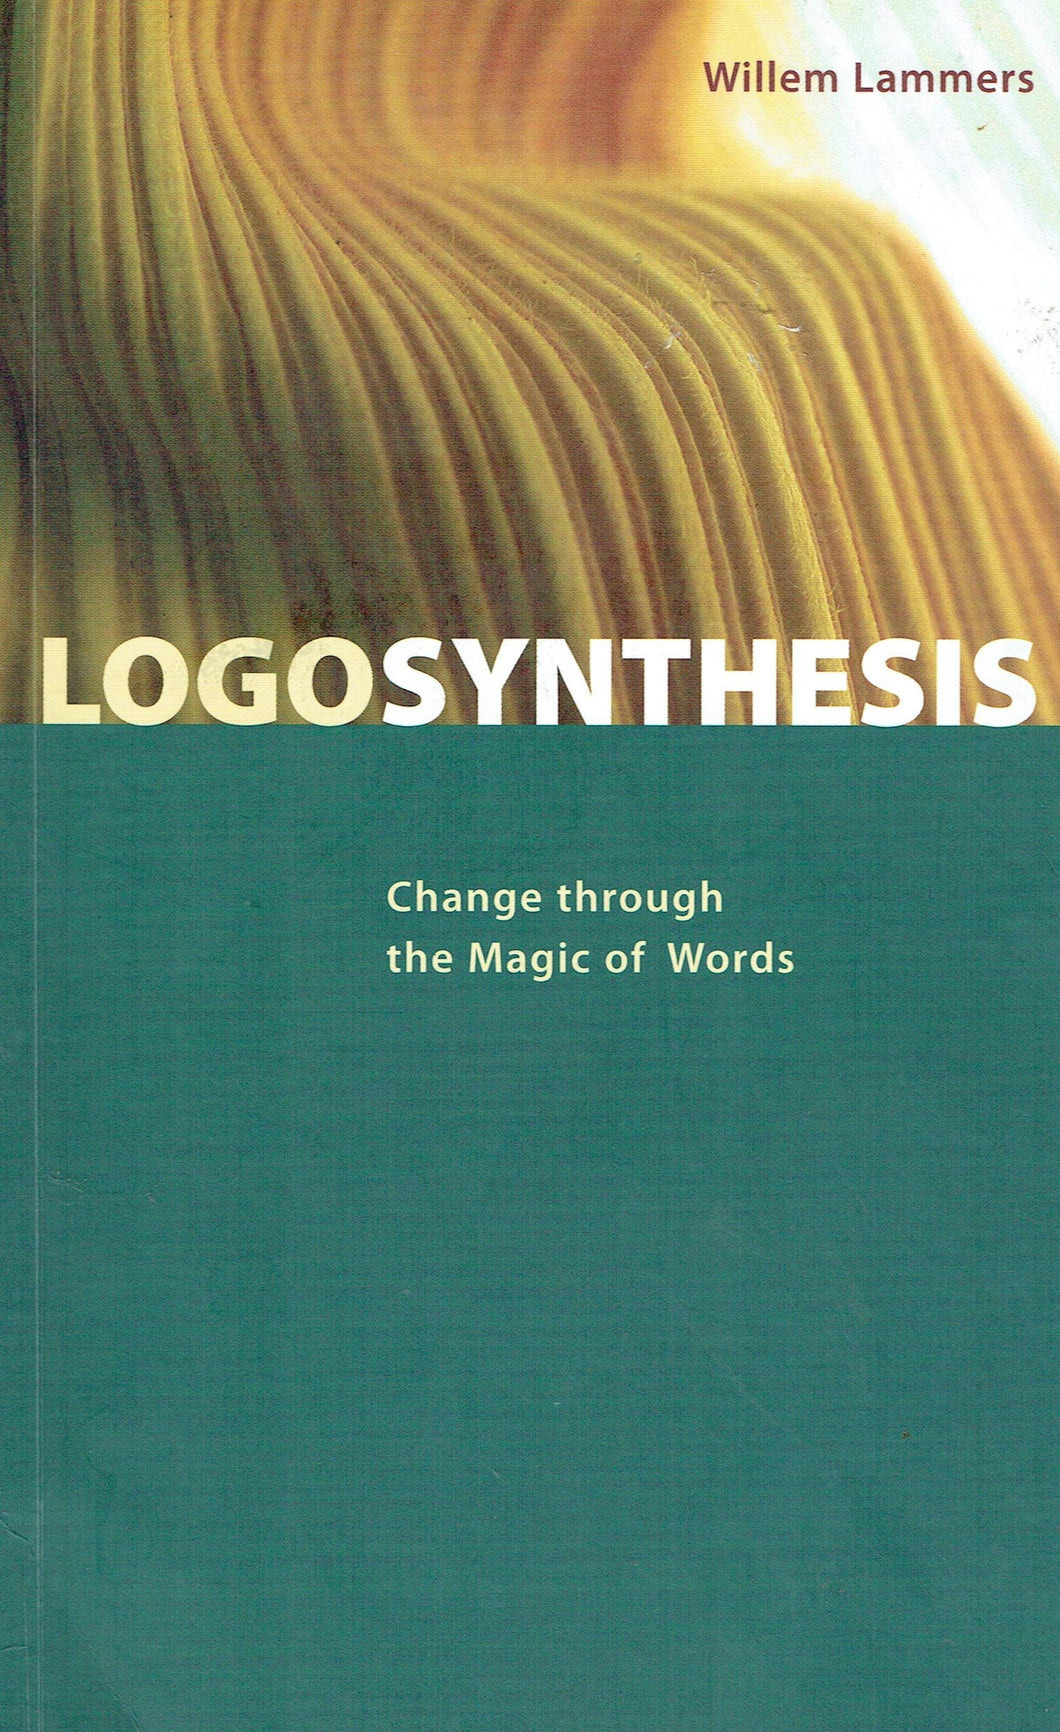 Logosynthesis: Change through the Magic of Words